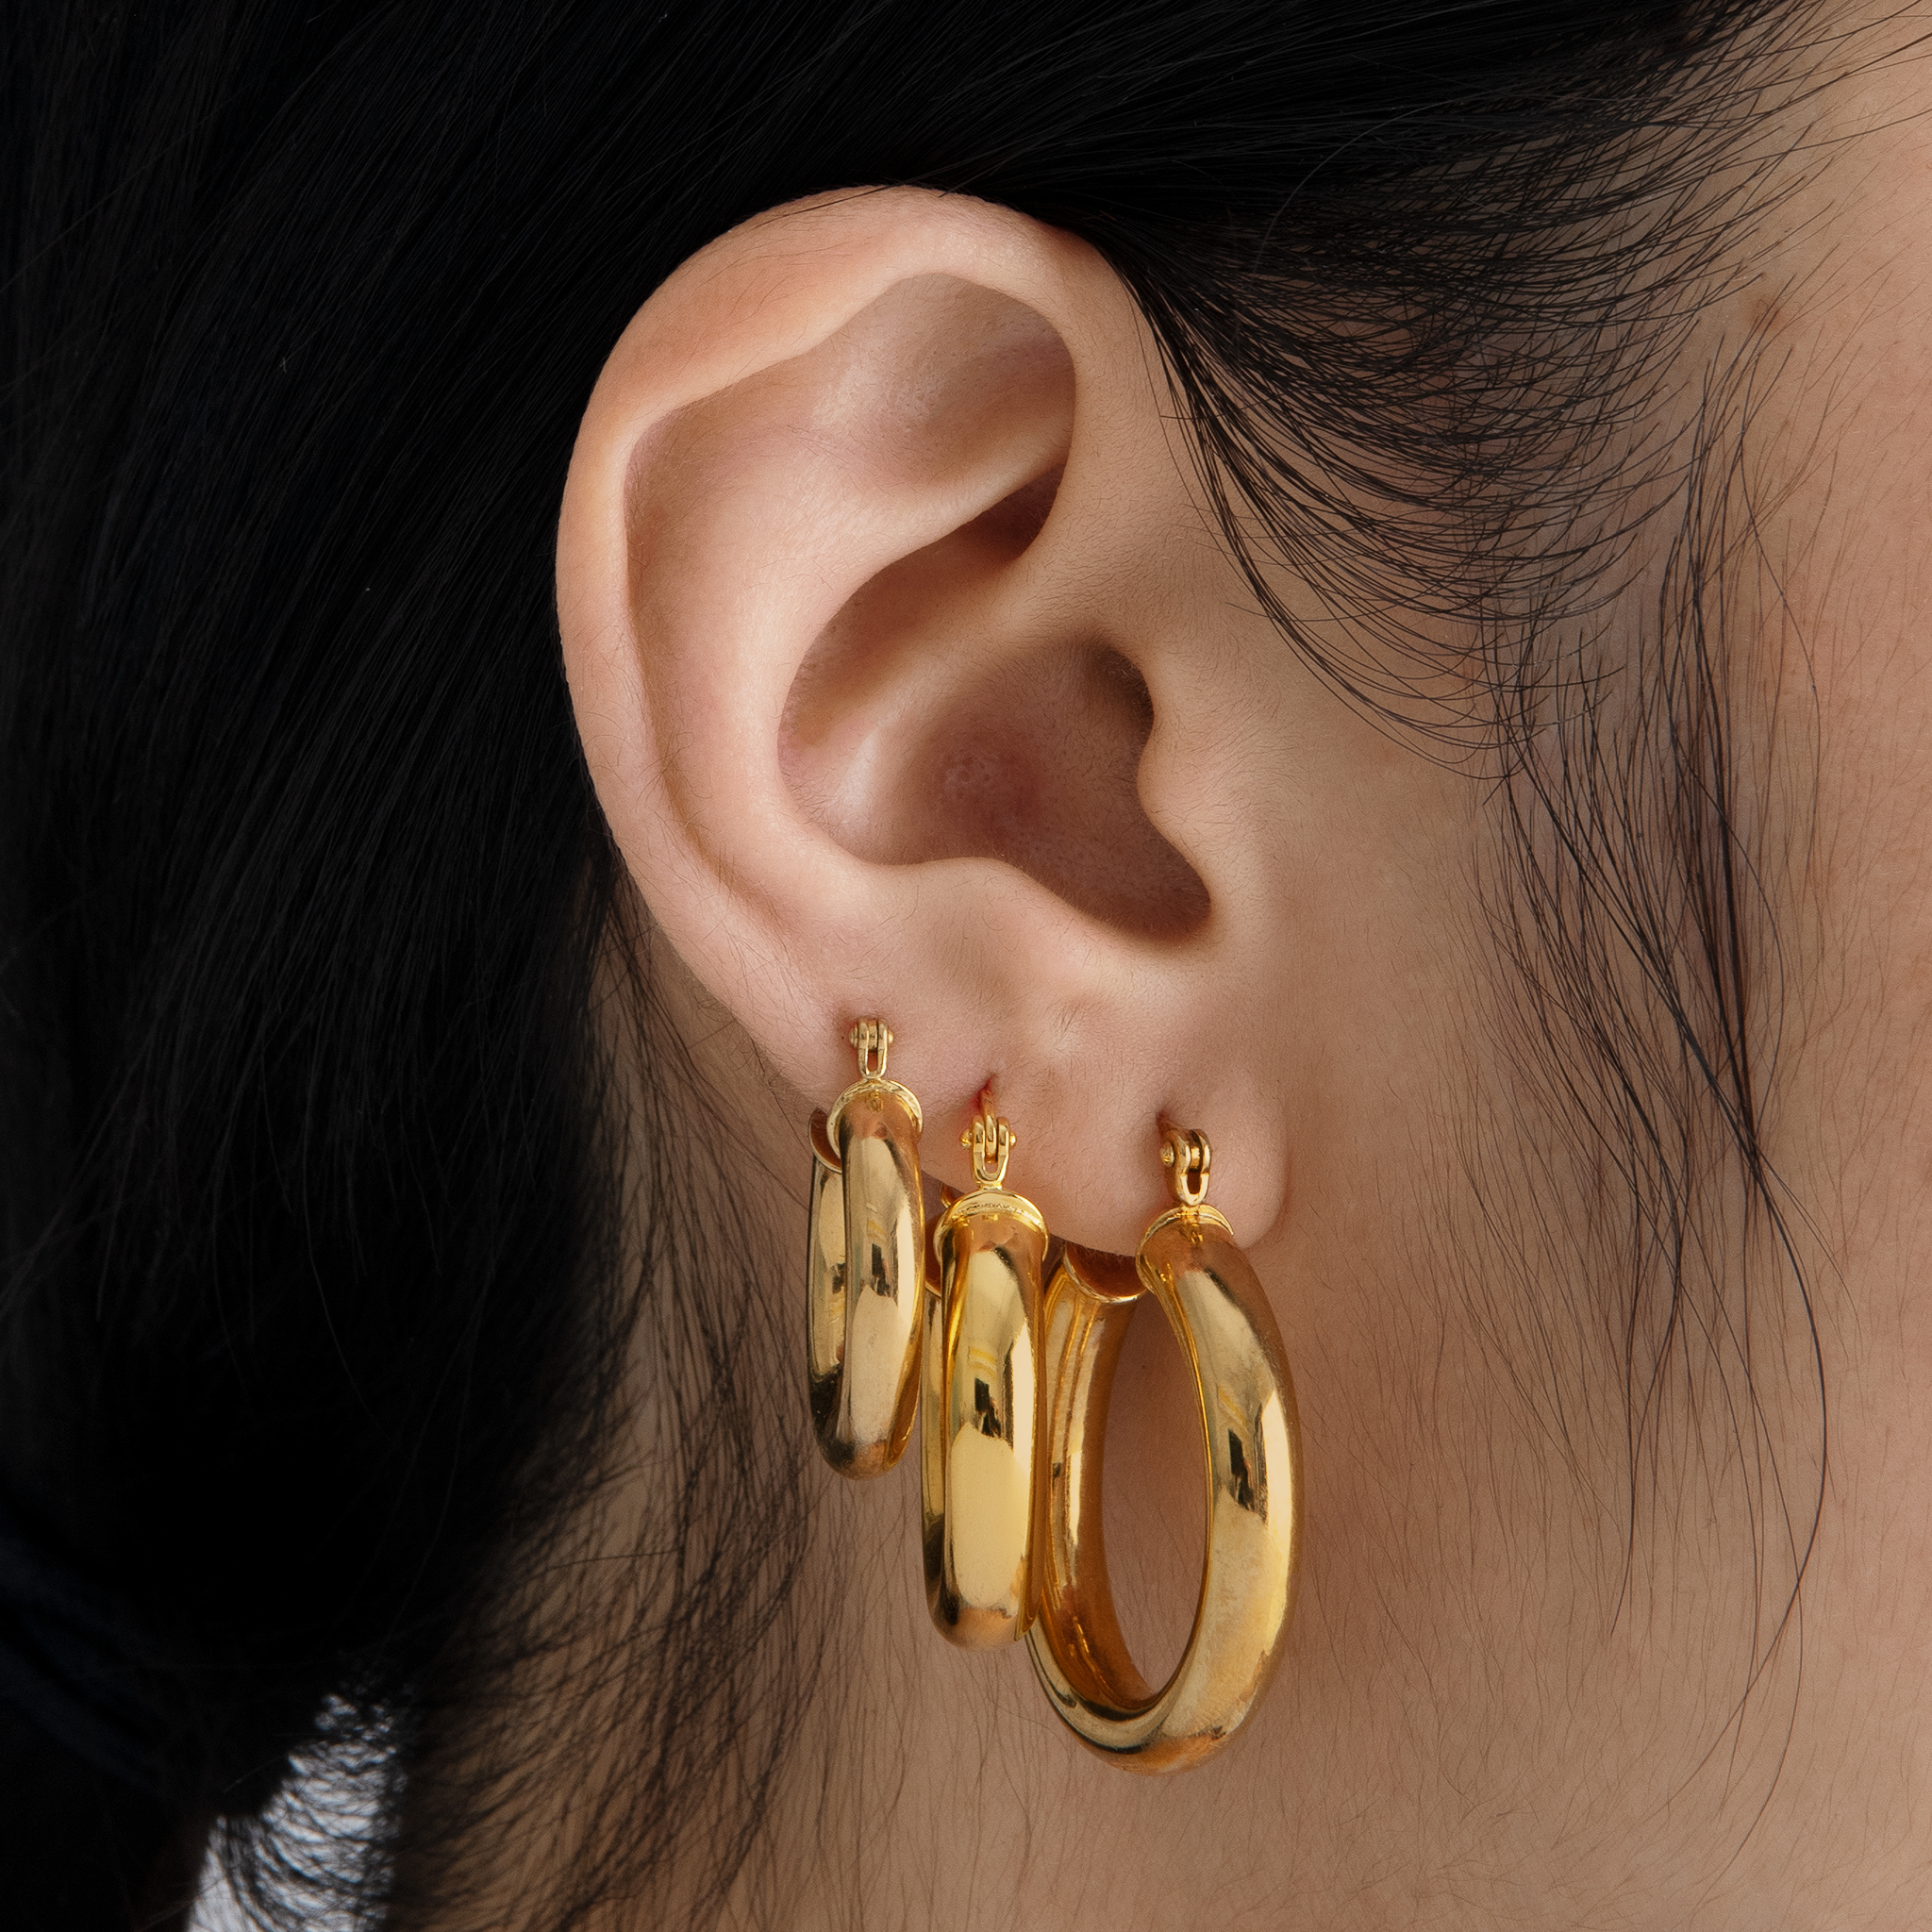 14 Gauge Conch Piercing Jewelry CZ Paved Conch Jewelry Hoop – OUFER BODY  JEWELRY